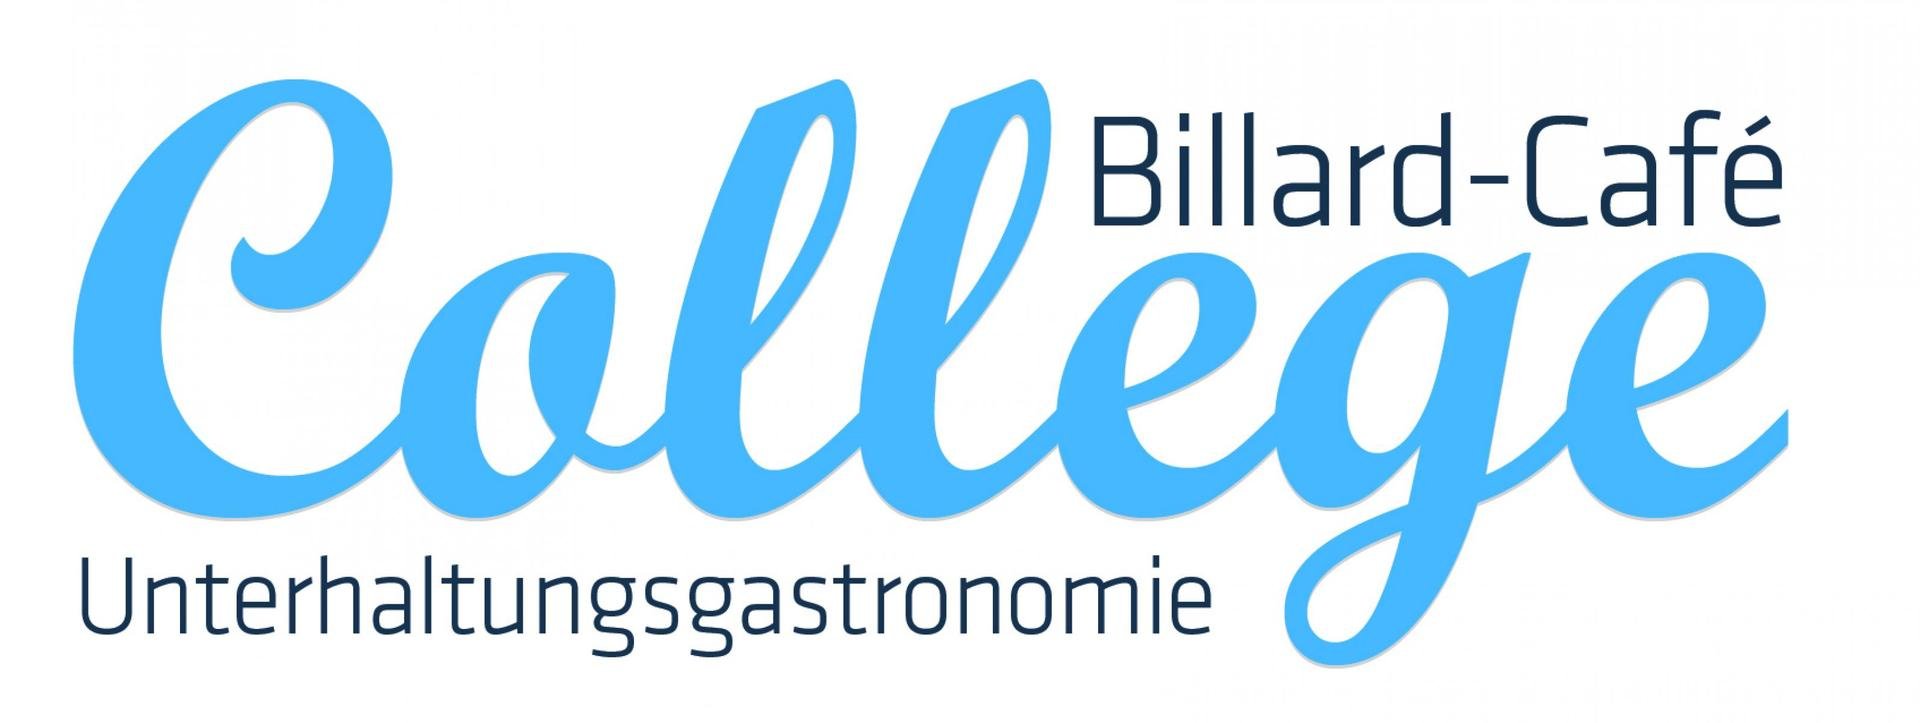 Billard-Café College Logo